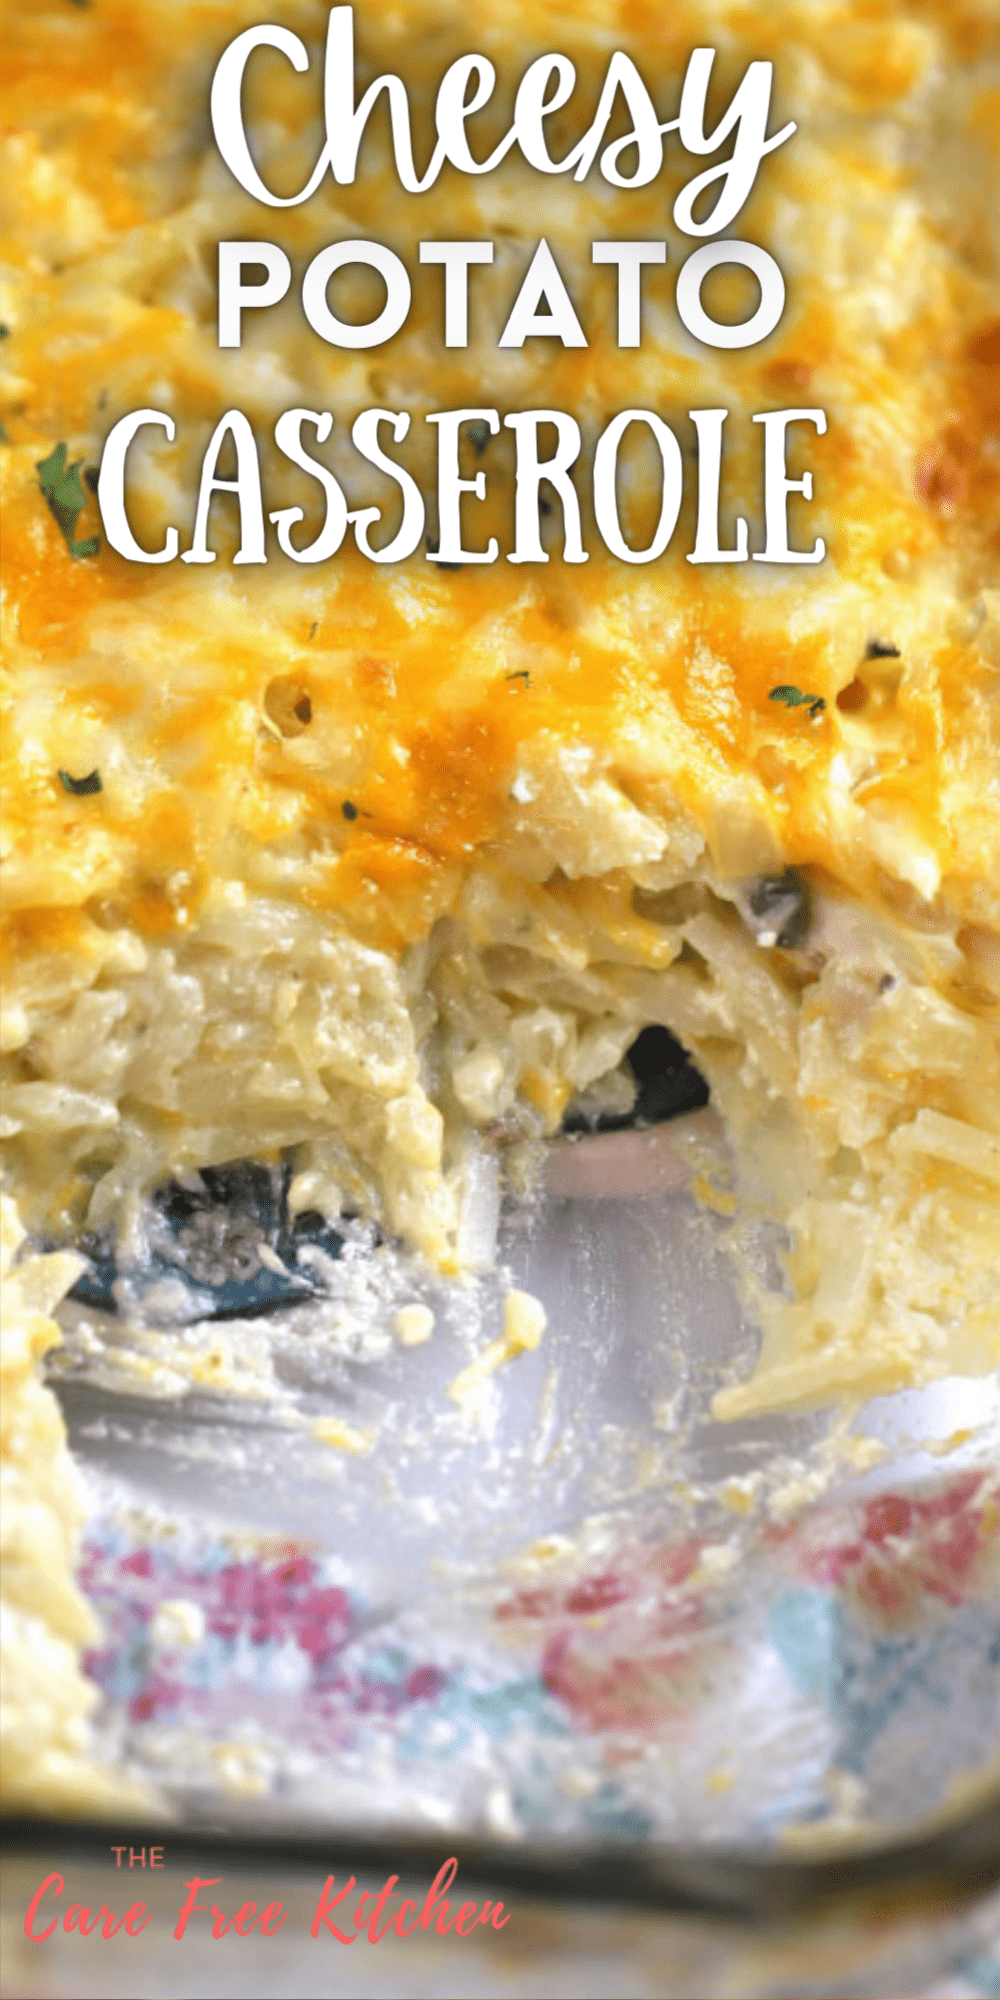 Cheesy Potato Casserole - The Carefree Kitchen